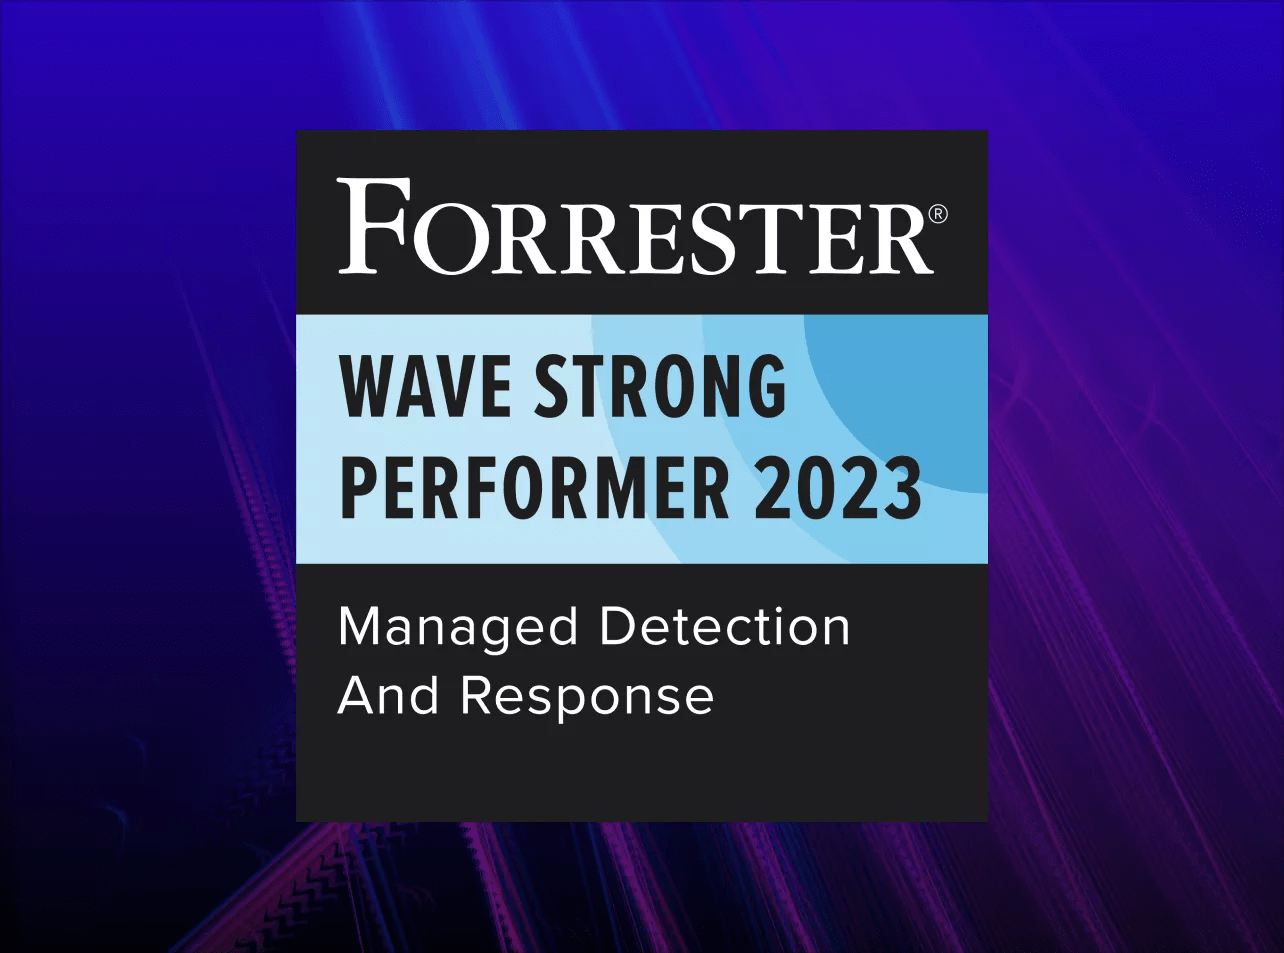 Forrester Wave Q2 2023 4x3